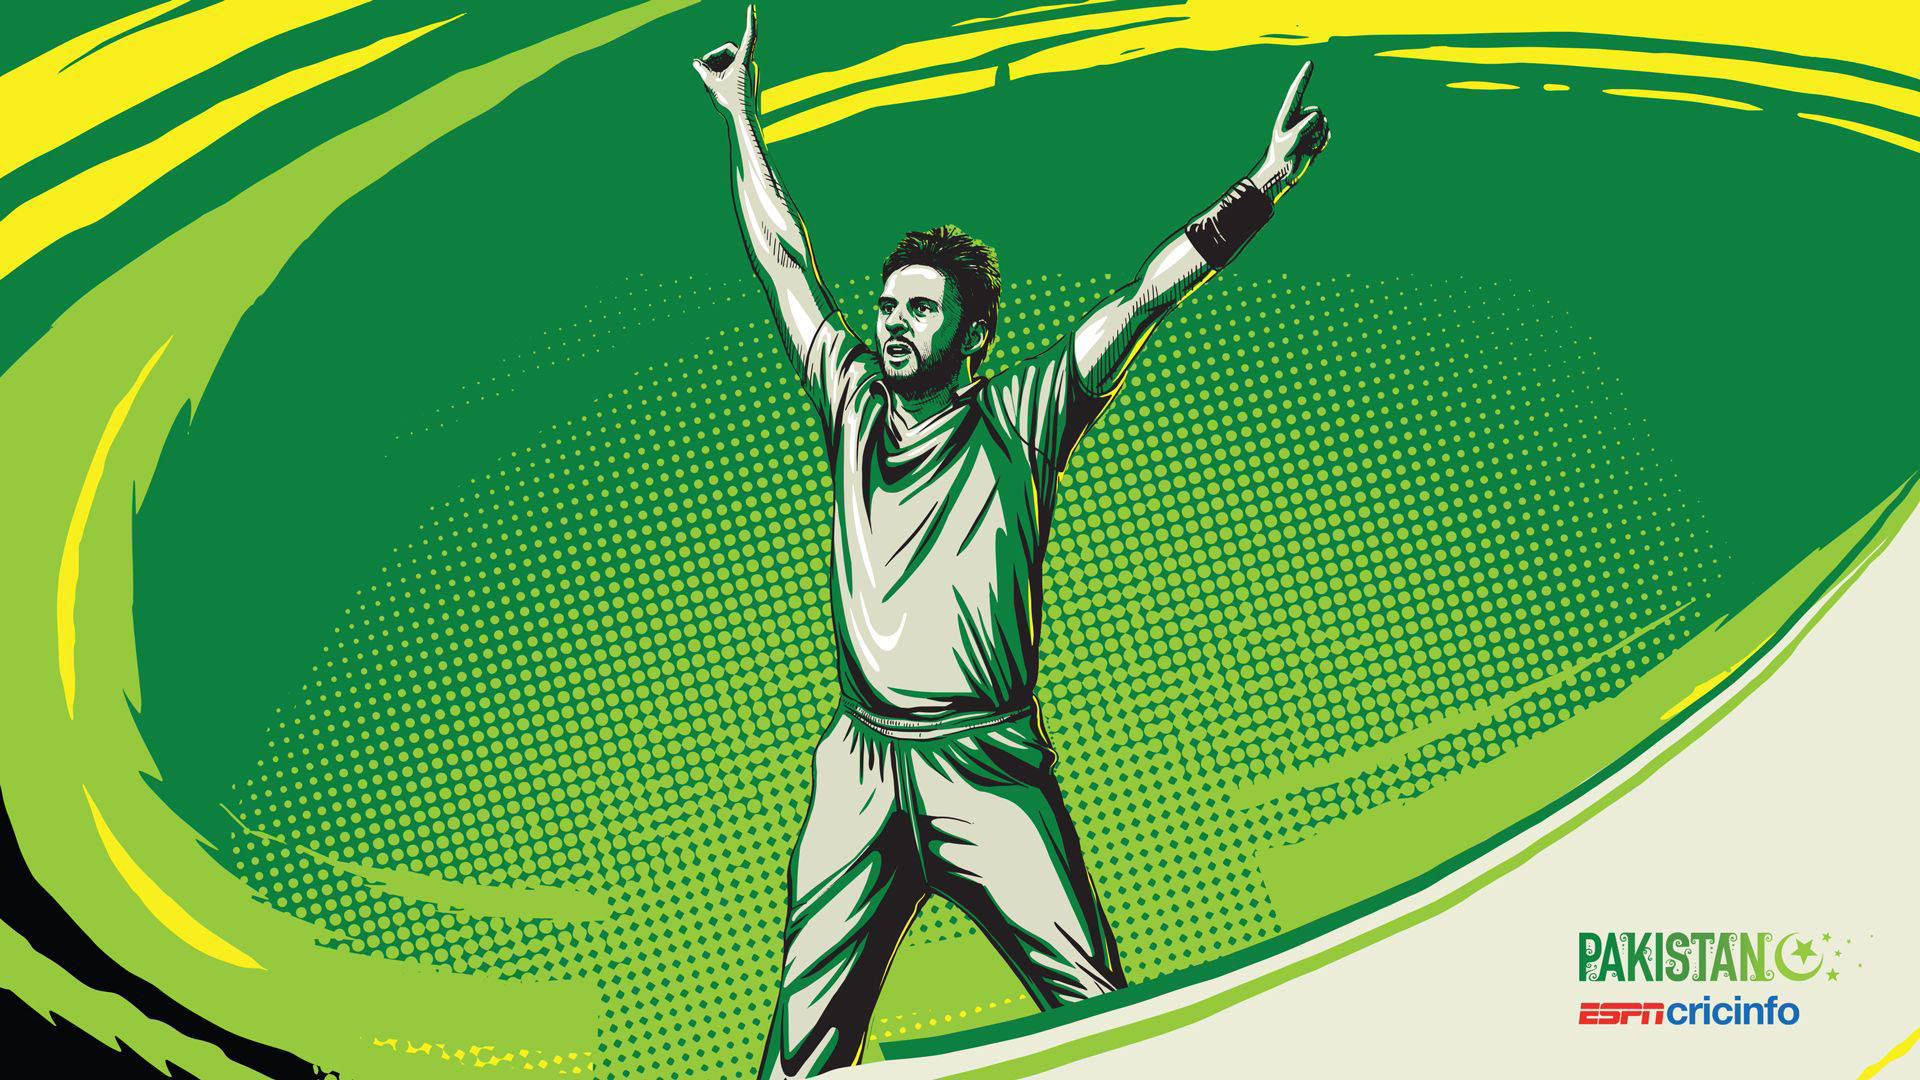 Pakistan Cricket Afridi Halftone Design (in German: Pakistan Cricket Afridi Halftone Design) Wallpaper